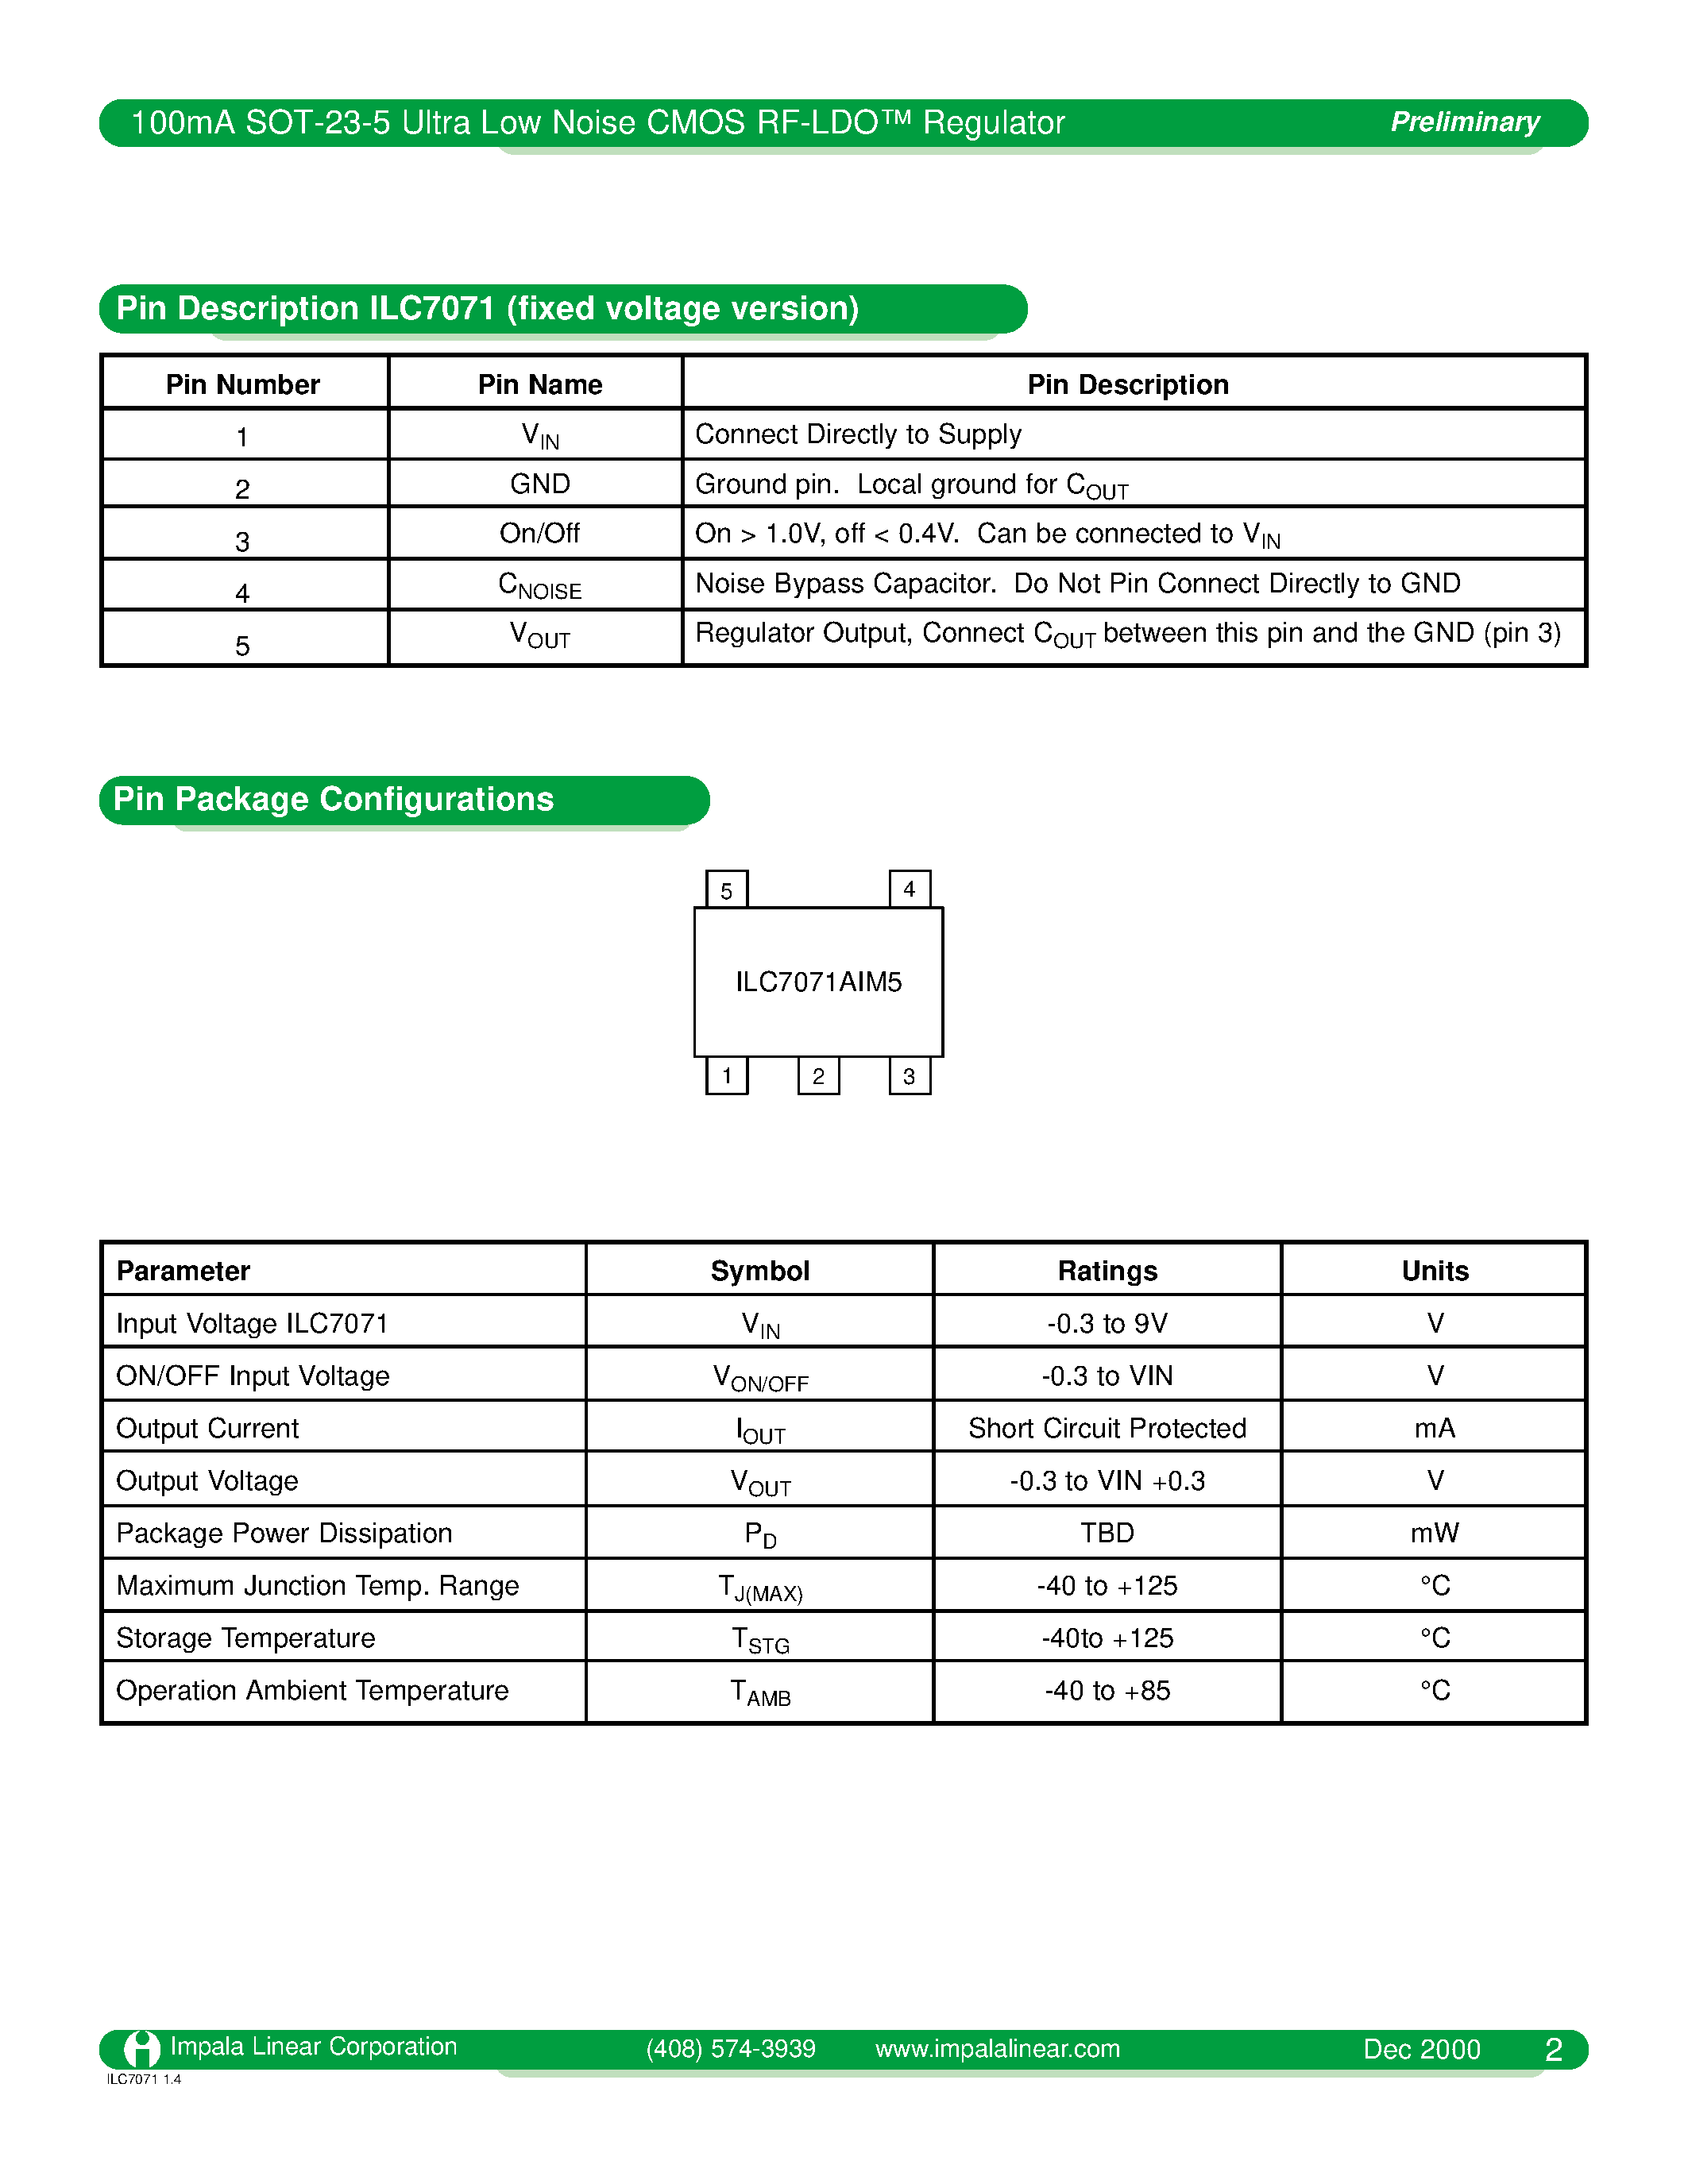 Datasheet ILC7071AIM5-47 - 100MA SOT-23-5 ULTRA LOW NOISE CMOS RF-LDO REGULATOR page 2